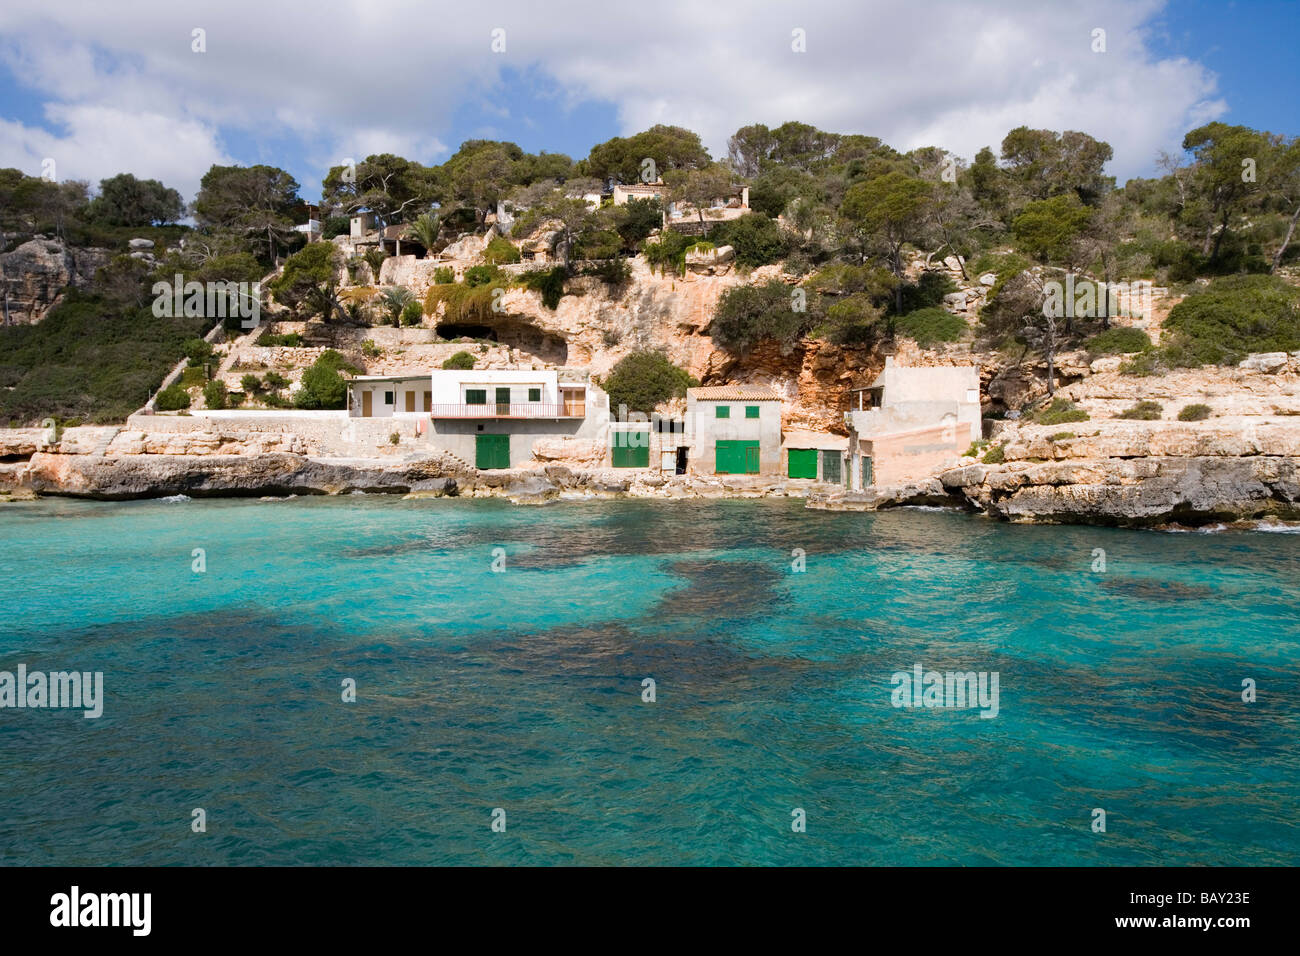 Fishing Boat Garages at Cala Llombards Cove, Cala Llombards, Mallorca, Balearic Islands, Spain Stock Photo